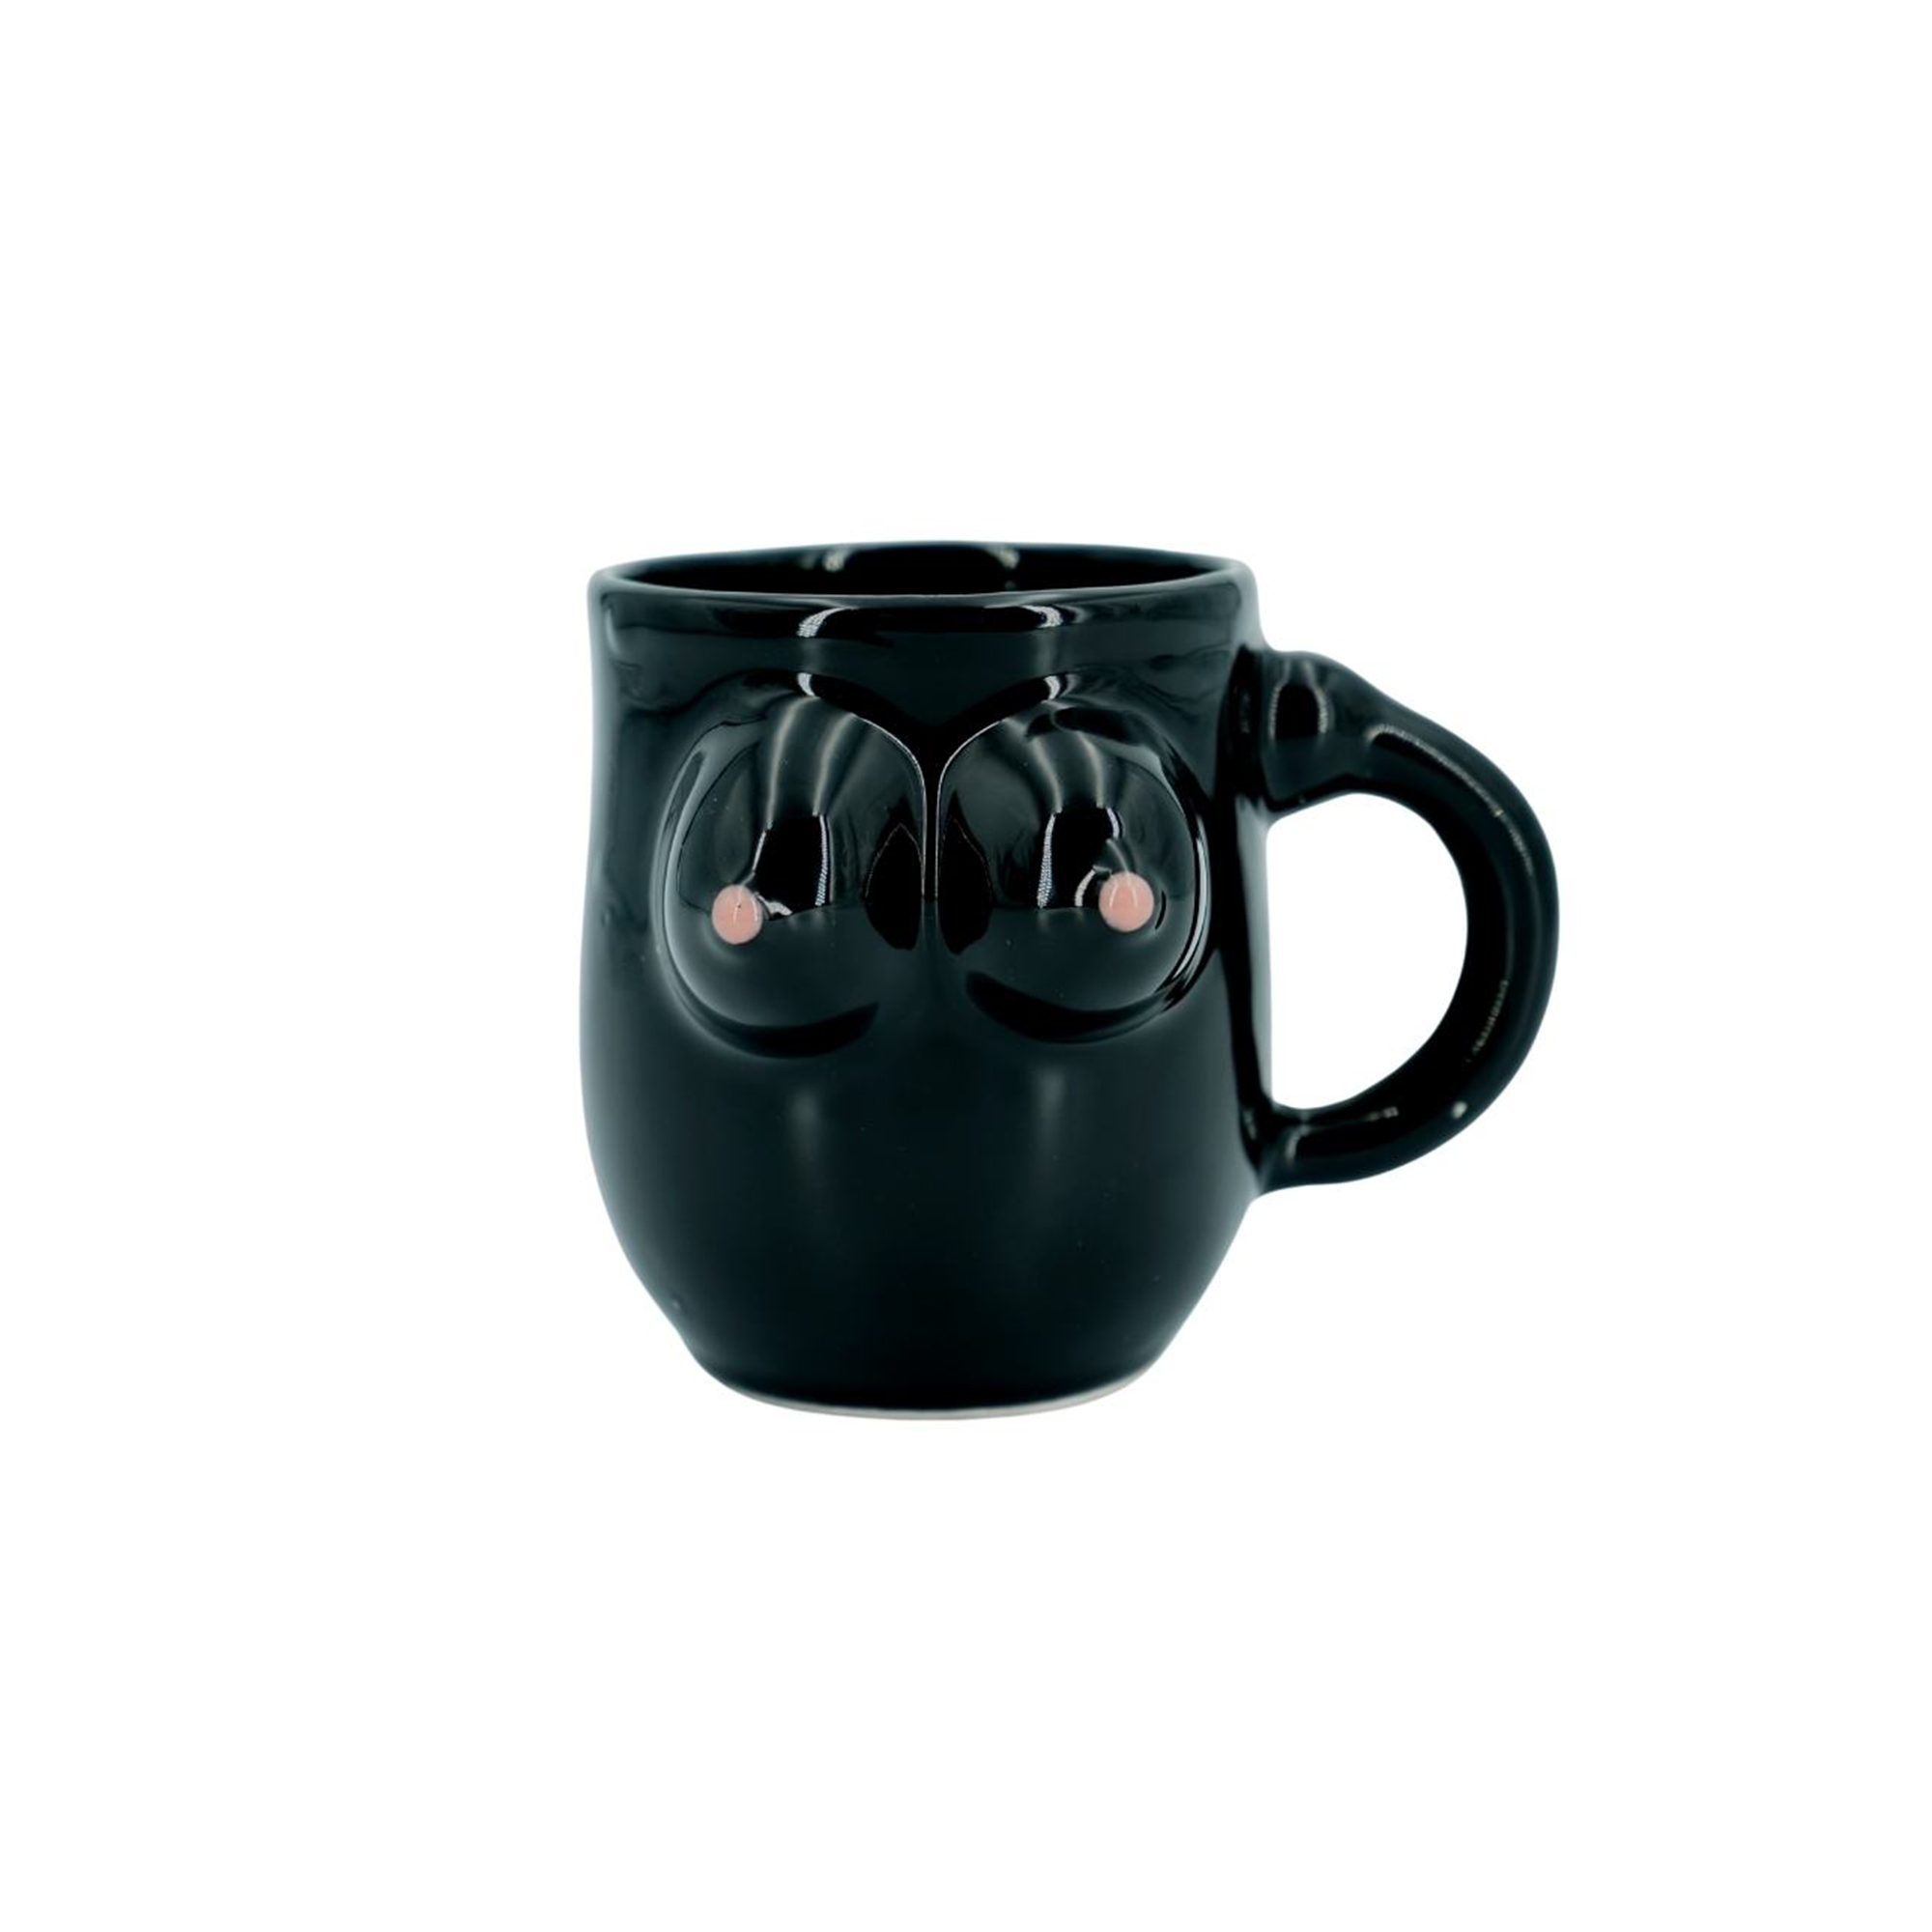 FOUFOUN® Mug Boobs Black